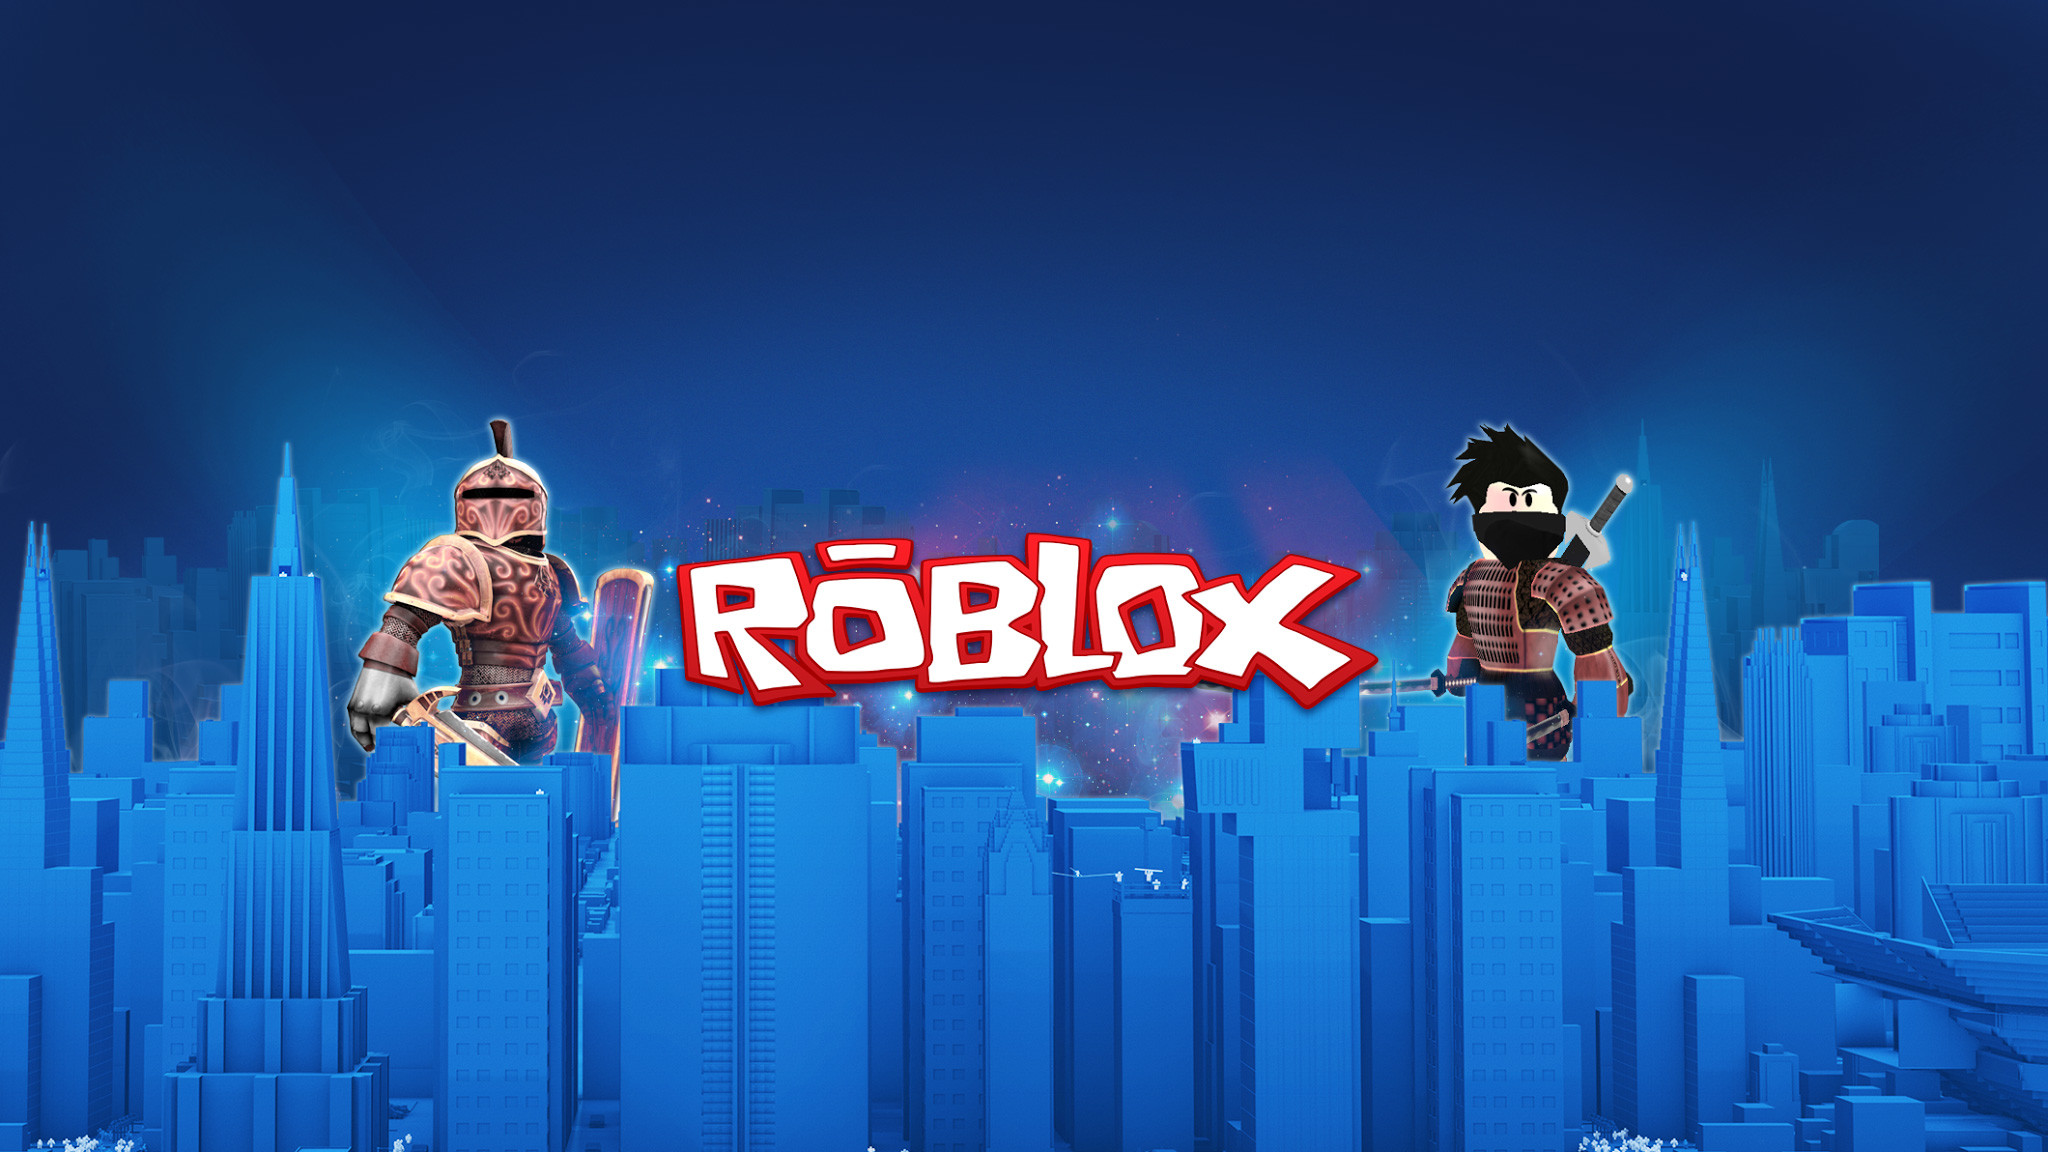 2048x1152 ROBLOXâ¢ Join now this Free MMORPG on Gameobot.com